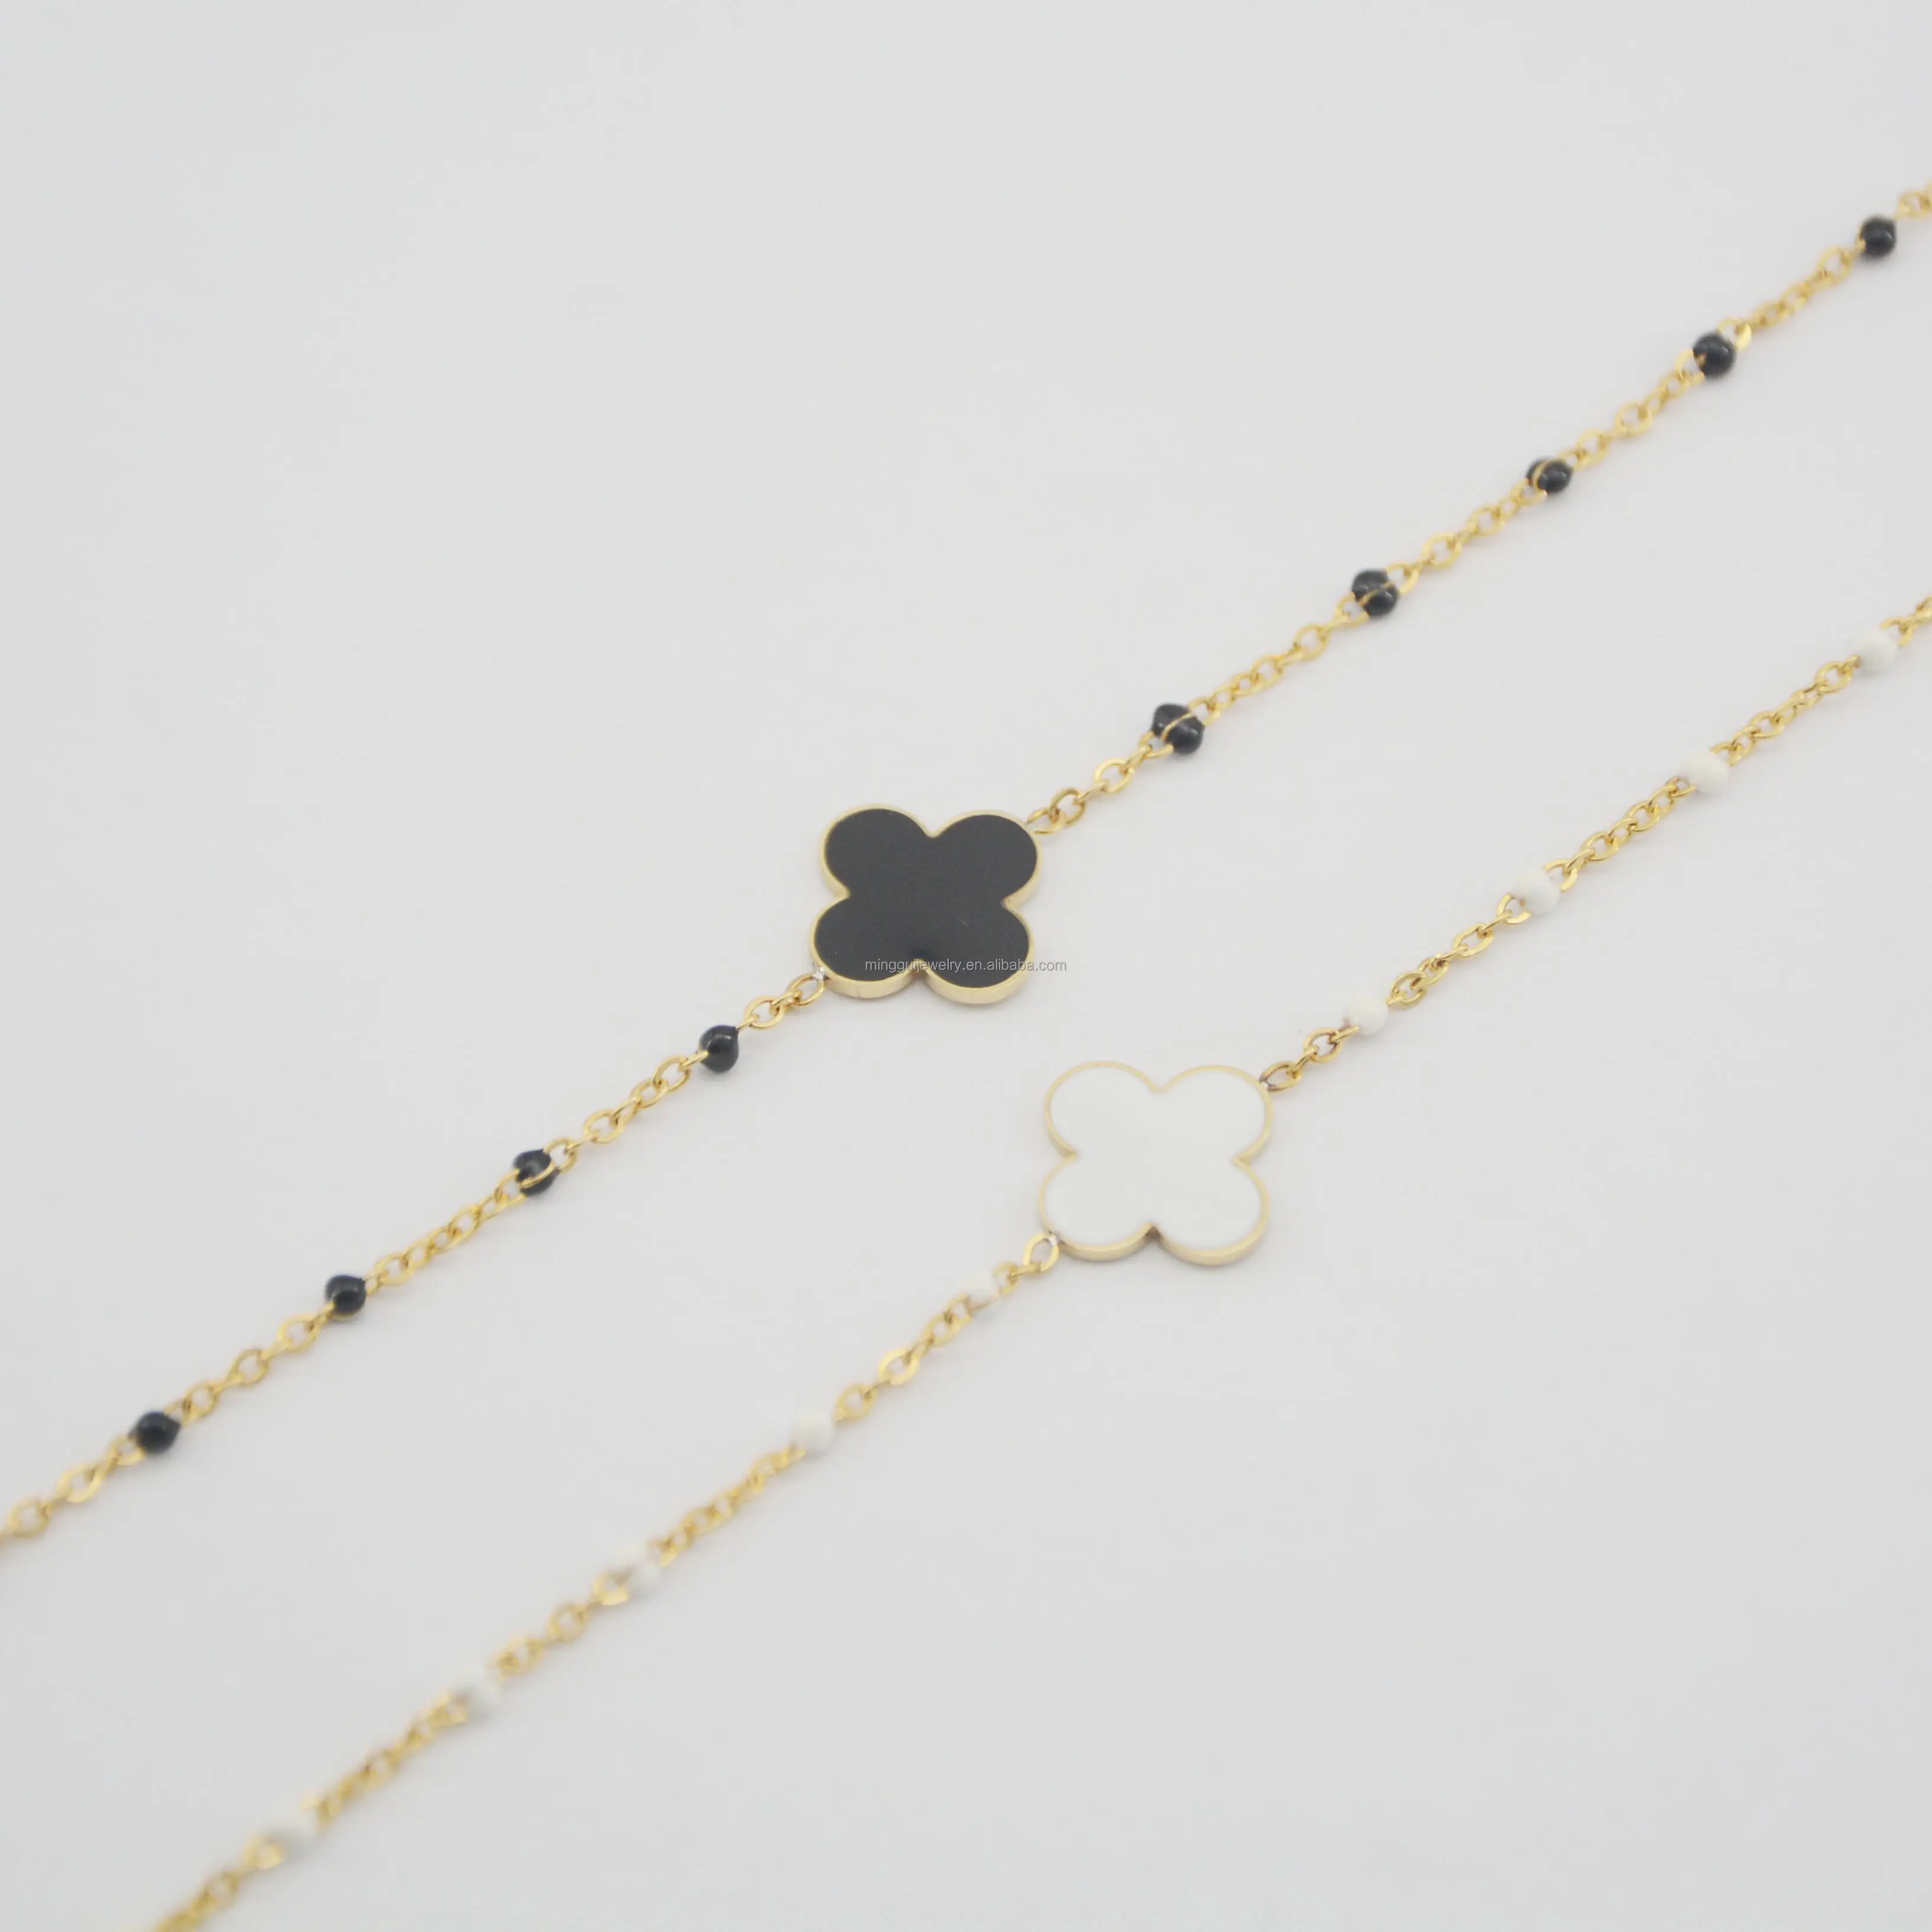 Fashion Jewelry Cross Minimalist Gold Color beads Charm Bracelets Bangles Link Chain stainless steel Bracelet